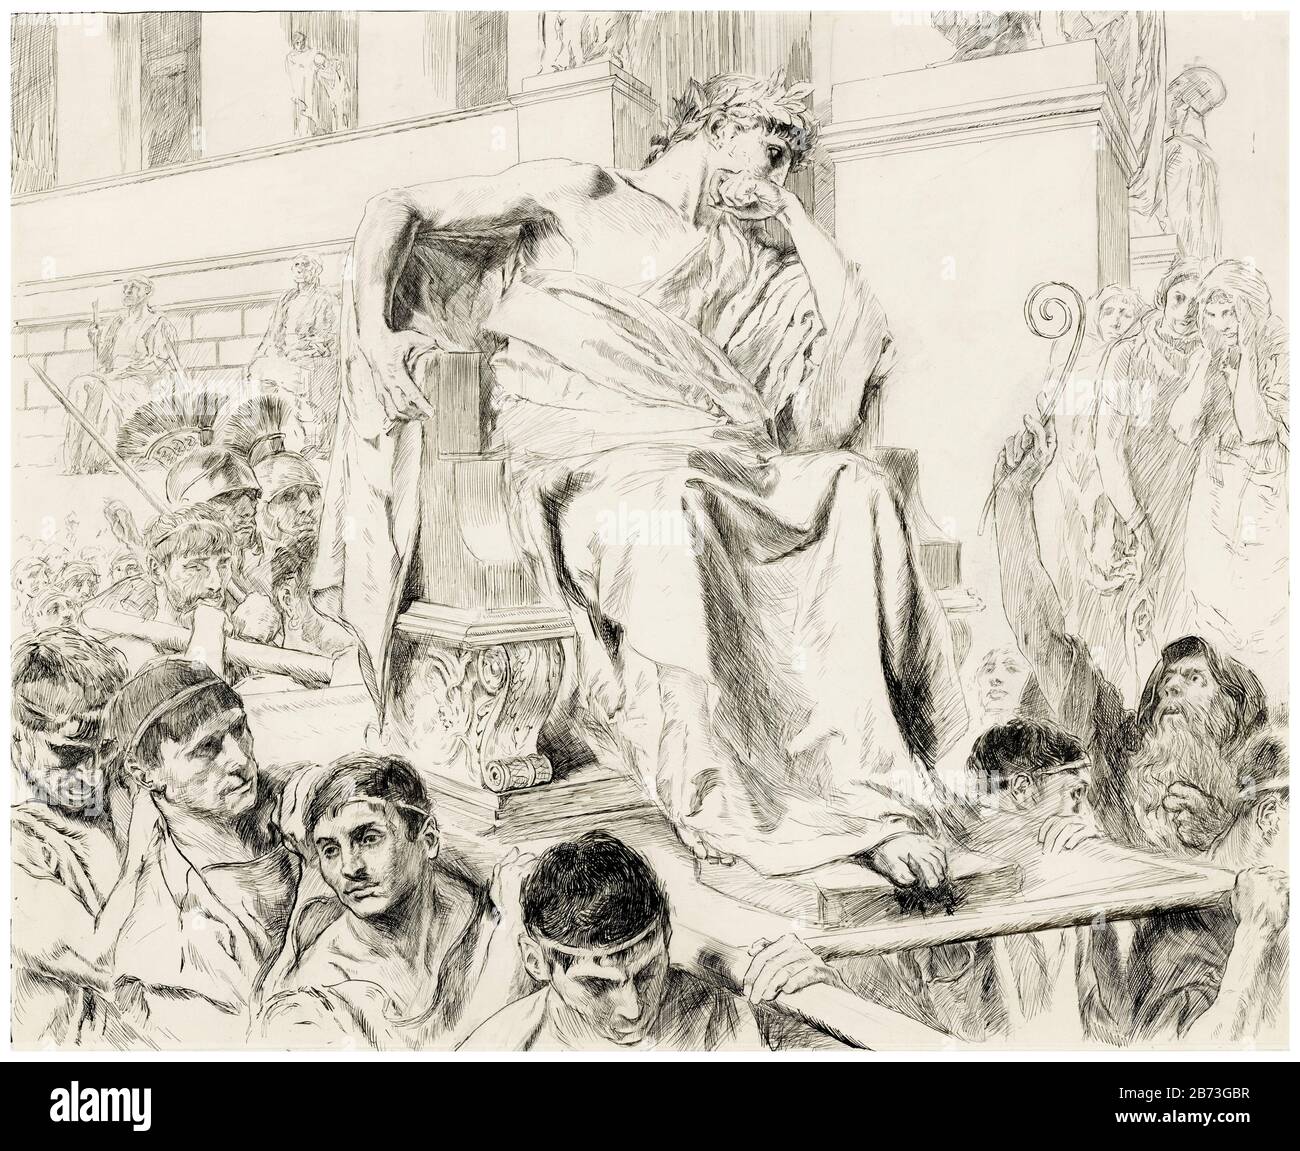 The Ides of March are come, Act III: Scene I, Julius Caesar, 20th Century illustration by Edwin Austin Abbey, circa 1906 Stock Photo